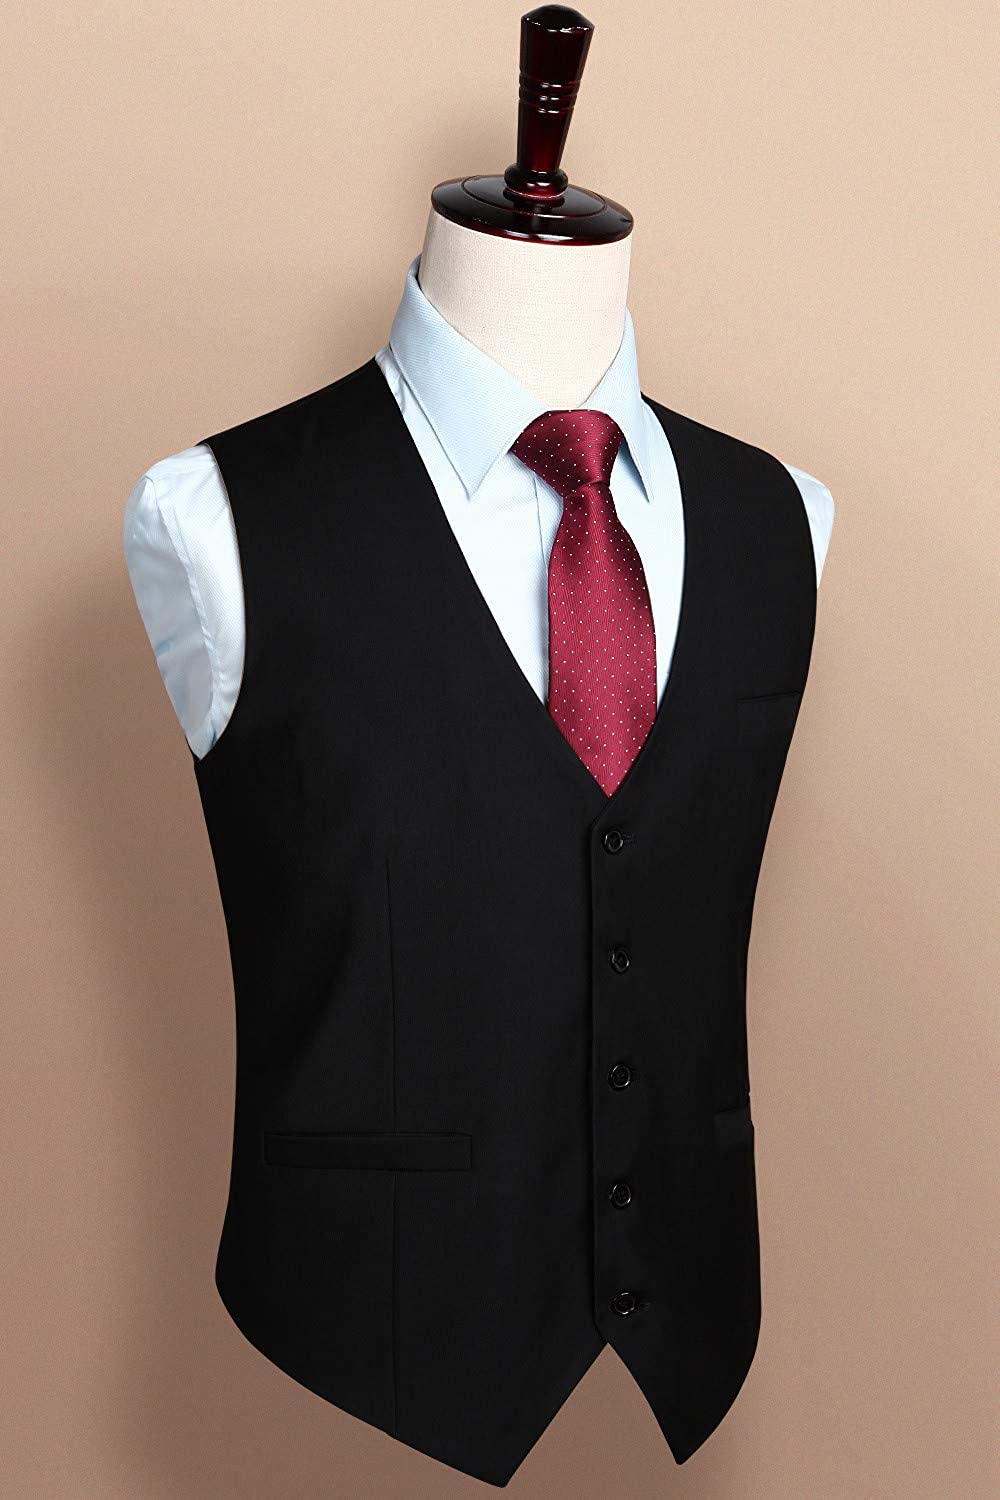 HISDERN Men's Suit Vest Business Formal Dress Waistcoat Vest with 3 ...